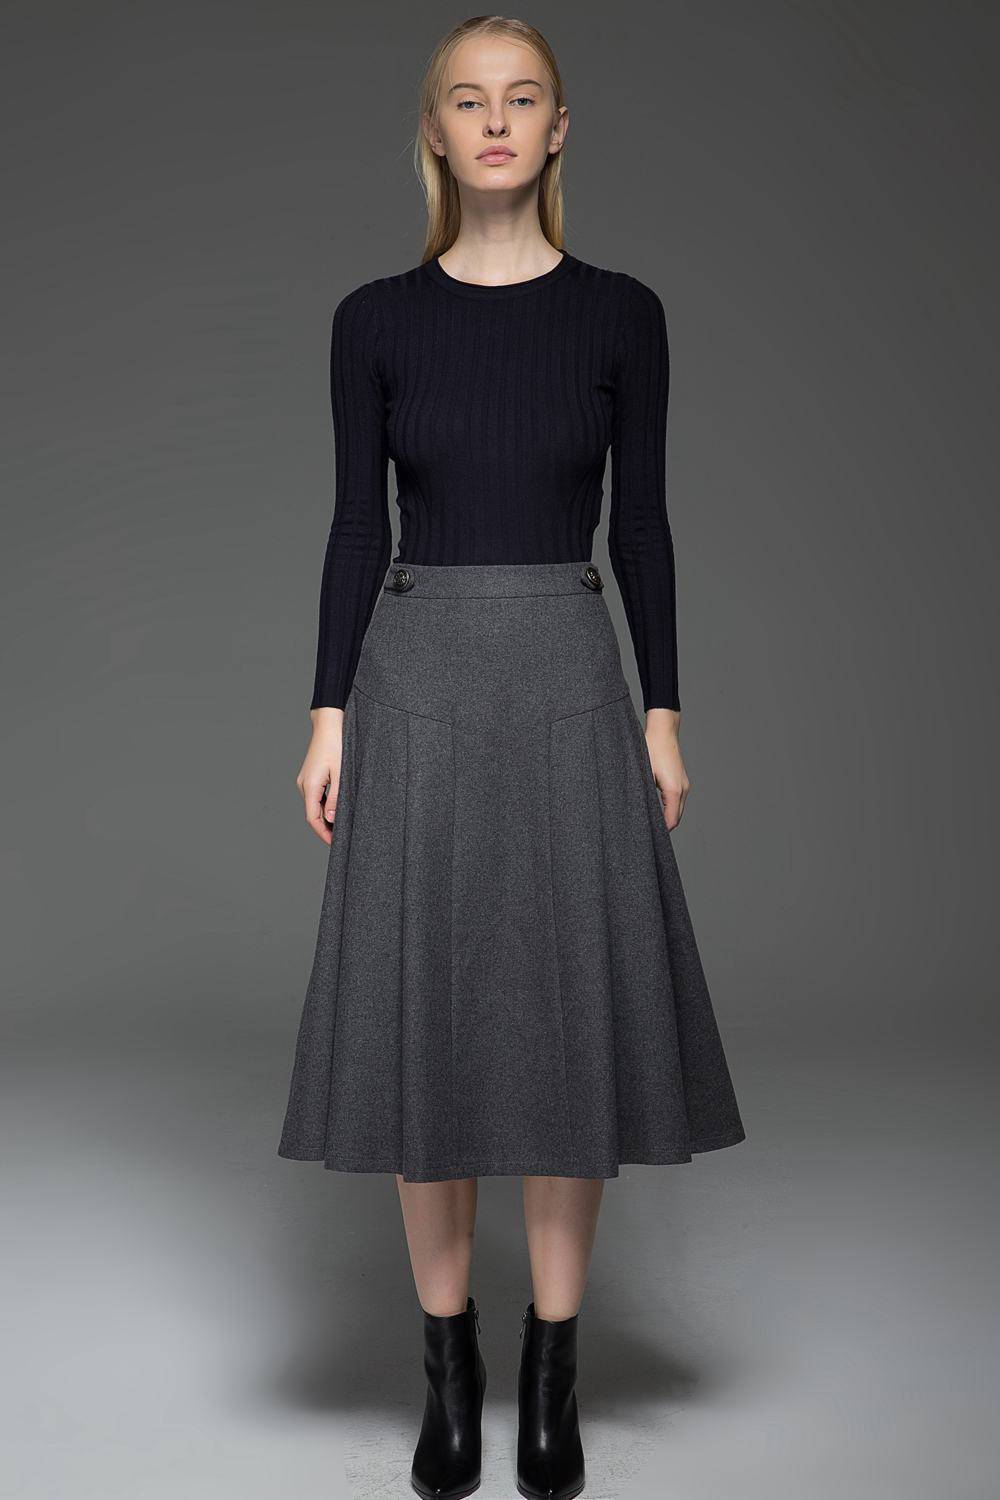 Gray wool skirt, Winter skirt, midi skirt, wool skirt, A Line Skirt, woman skirt, warm skirt, winter wool skirts, midi wool skirt  C772